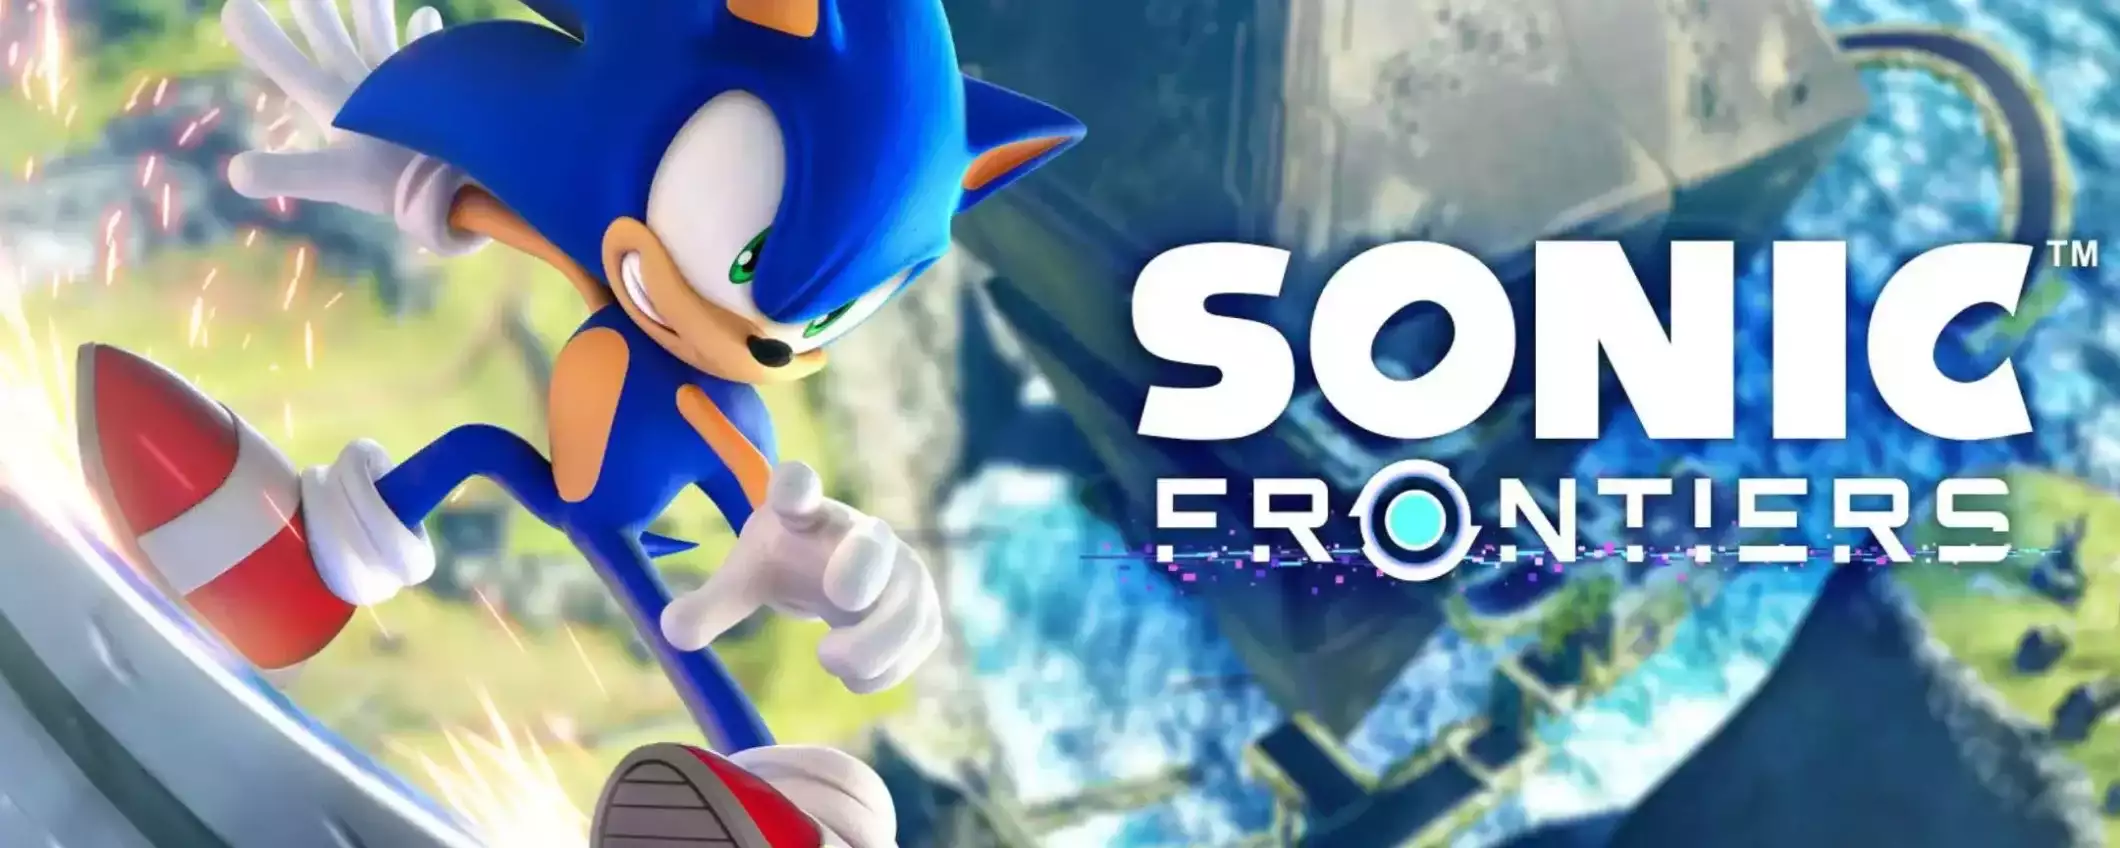 Sonic Frontiers (Nintendo Switch): costa pochissimo, solo 26,99€, IVA inclusa